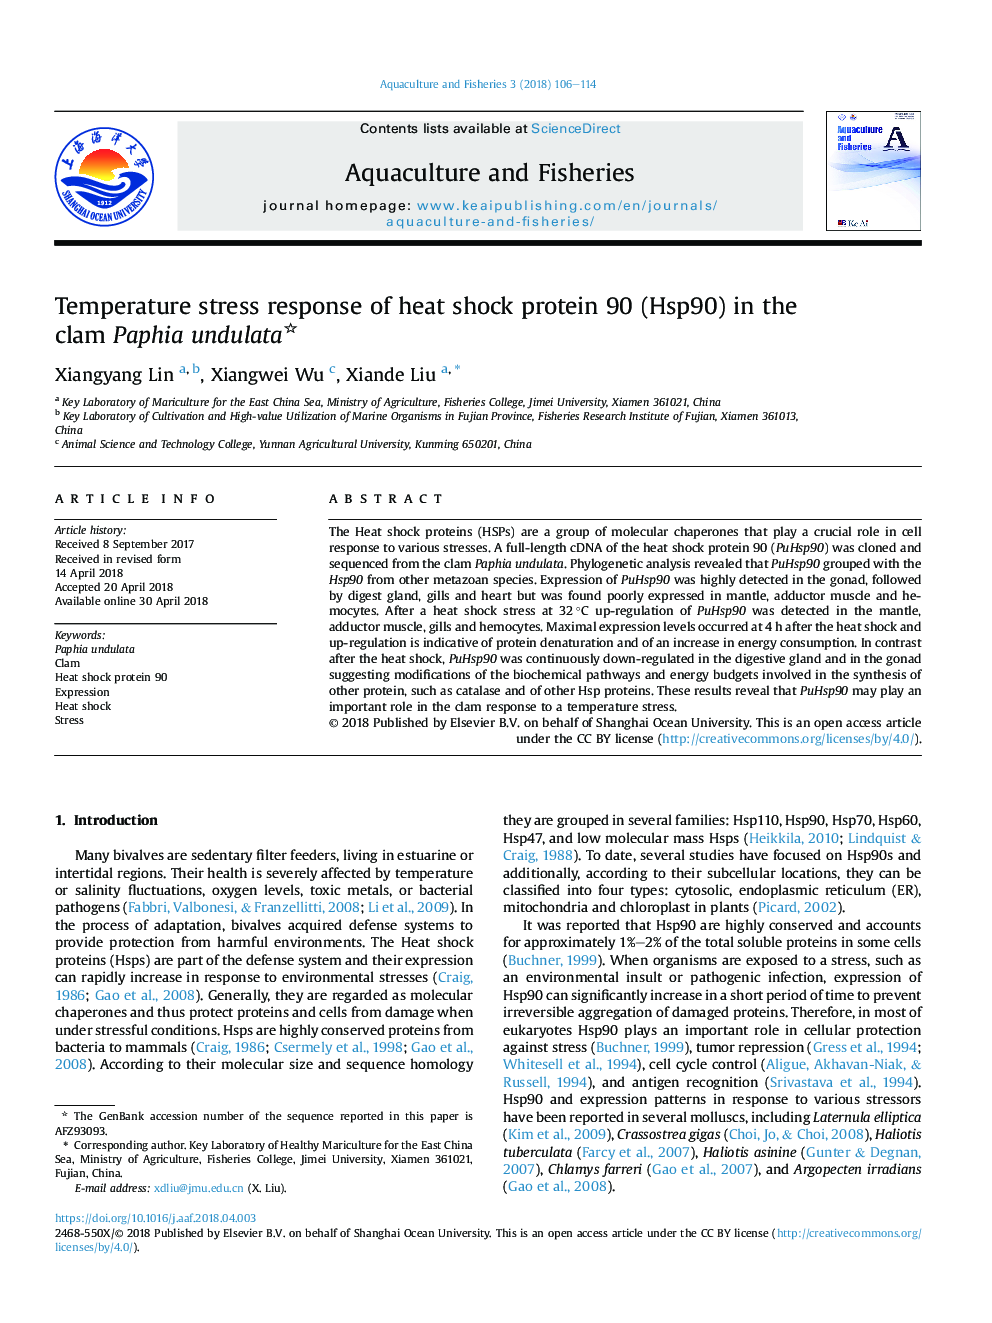 Temperature stress response of heat shock protein 90 (Hsp90) in the clam Paphia undulata